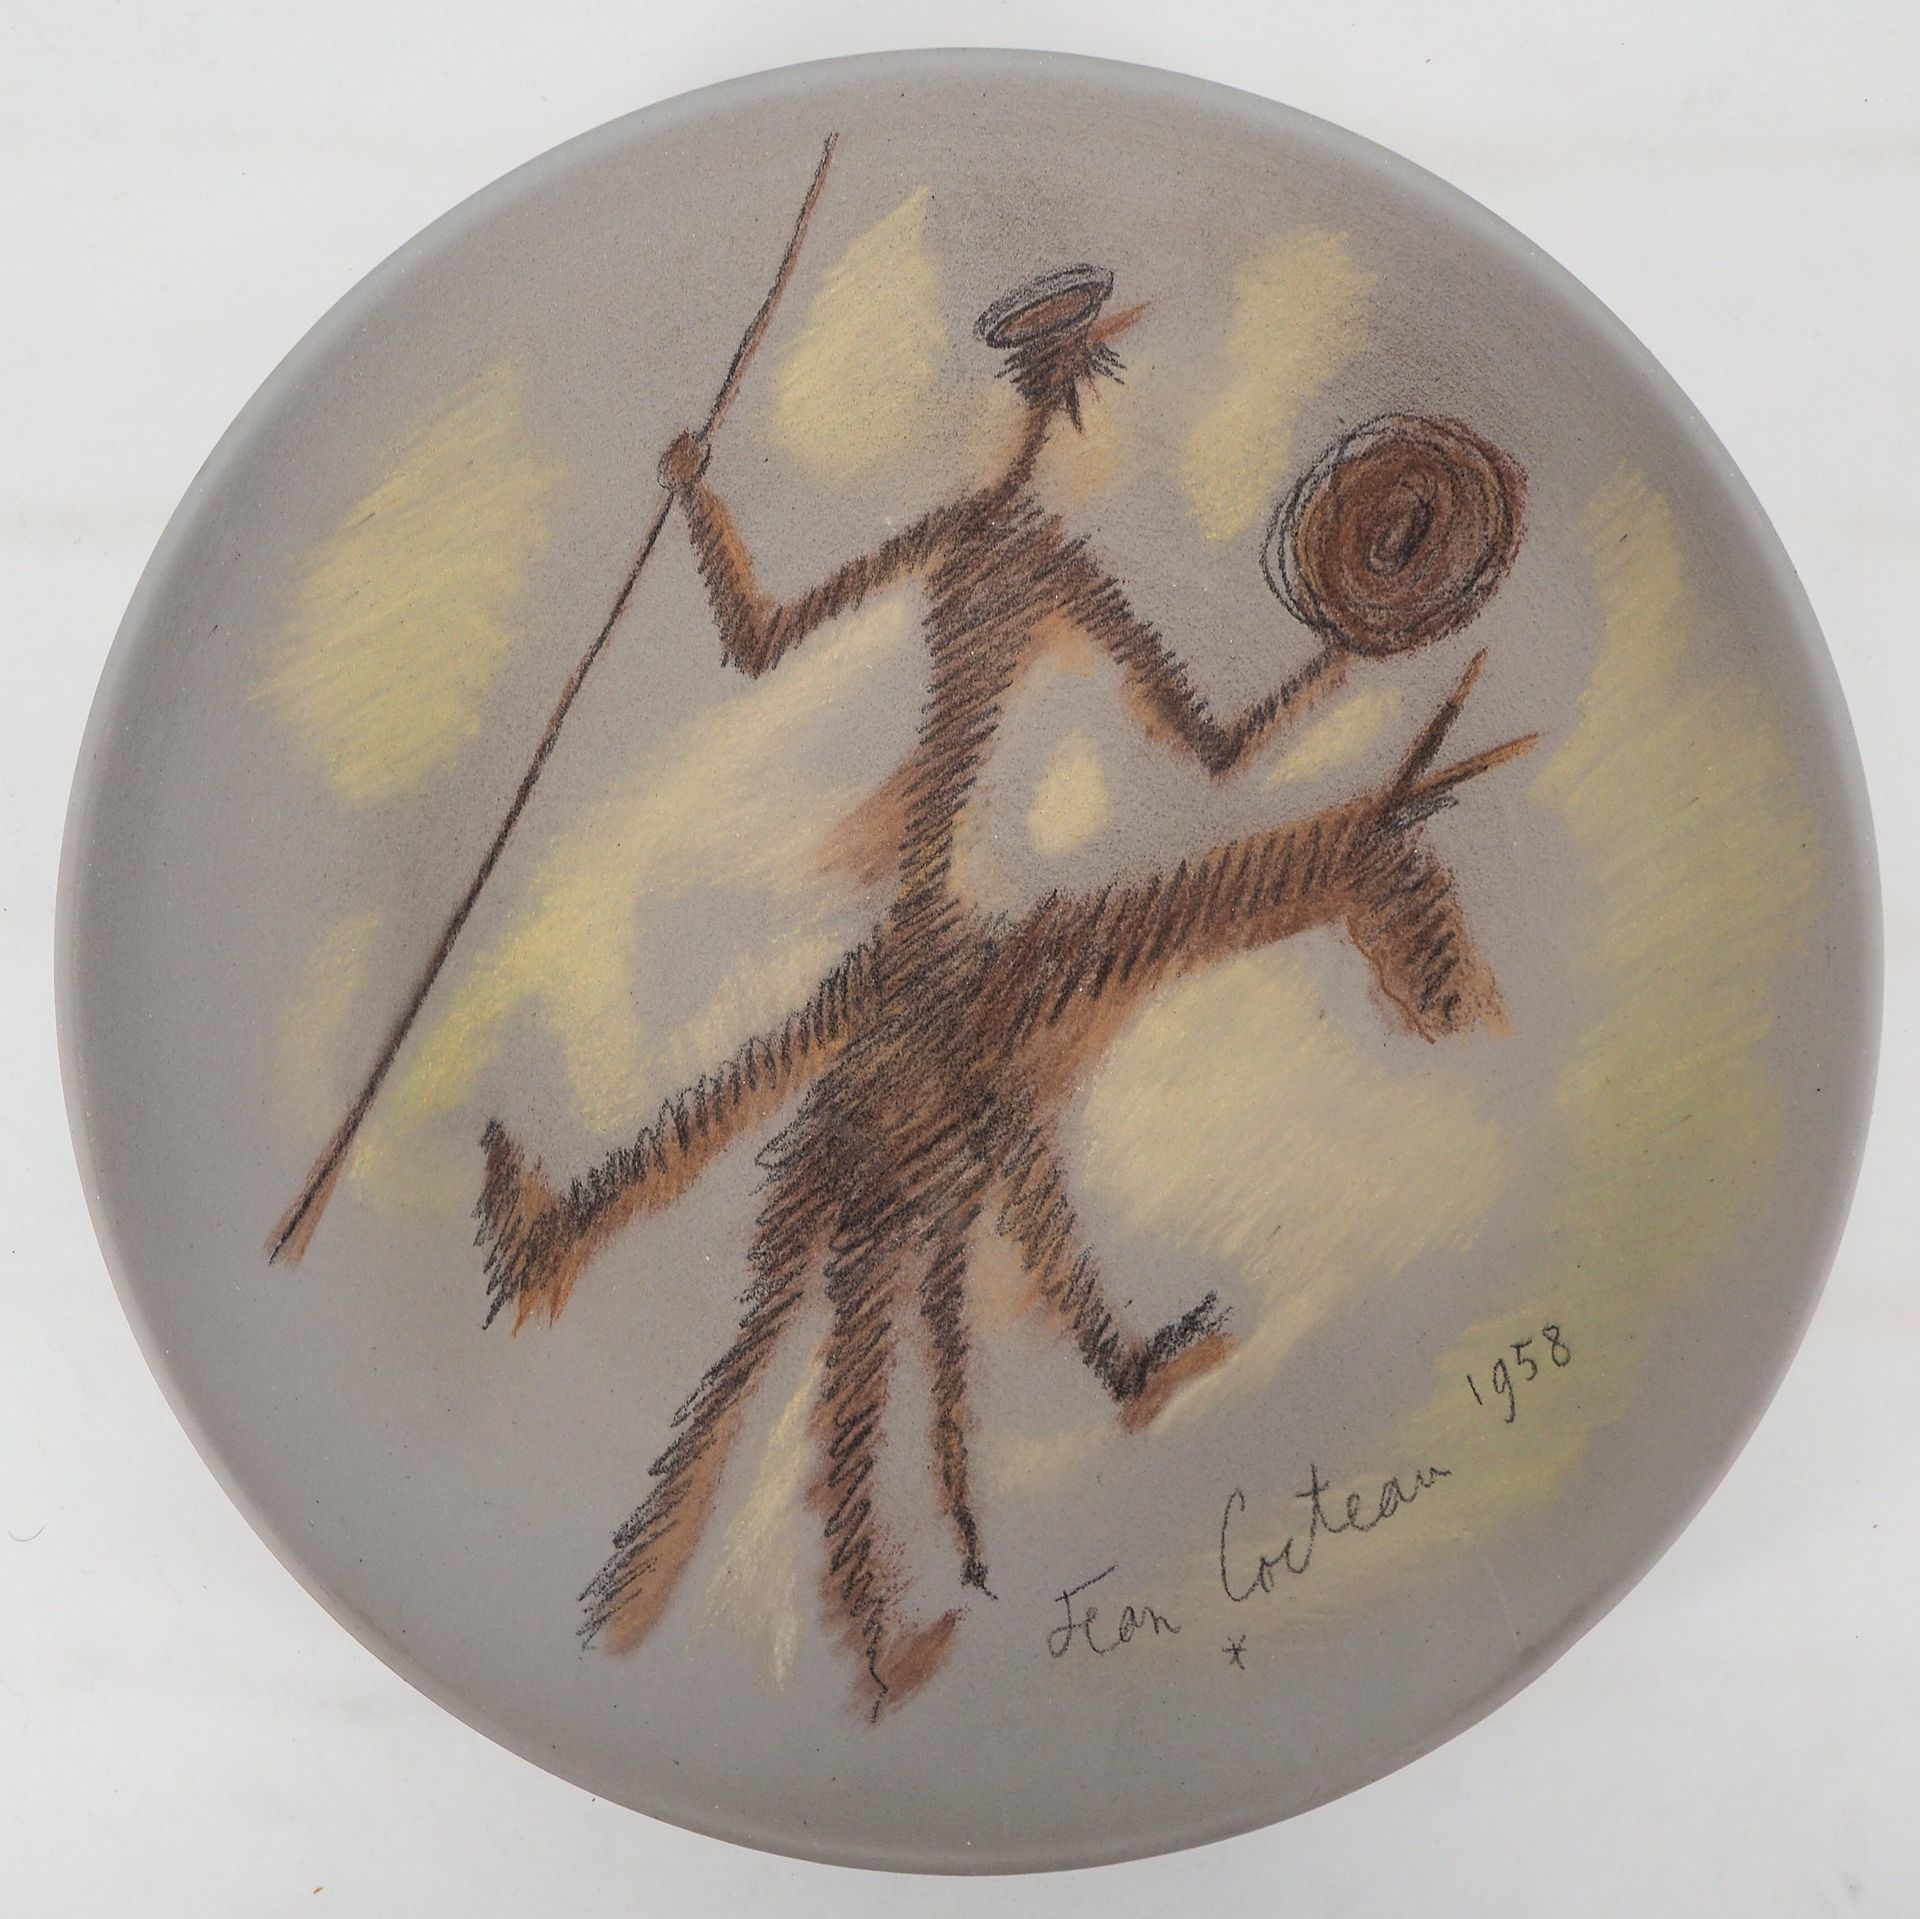 JEAN COCTEAU 让-科克托 (1889-1963)

堂吉诃德》(1958)

 大型陶瓷盘

 直径36厘米

 

Jean COCTEAU的原创&hellip;